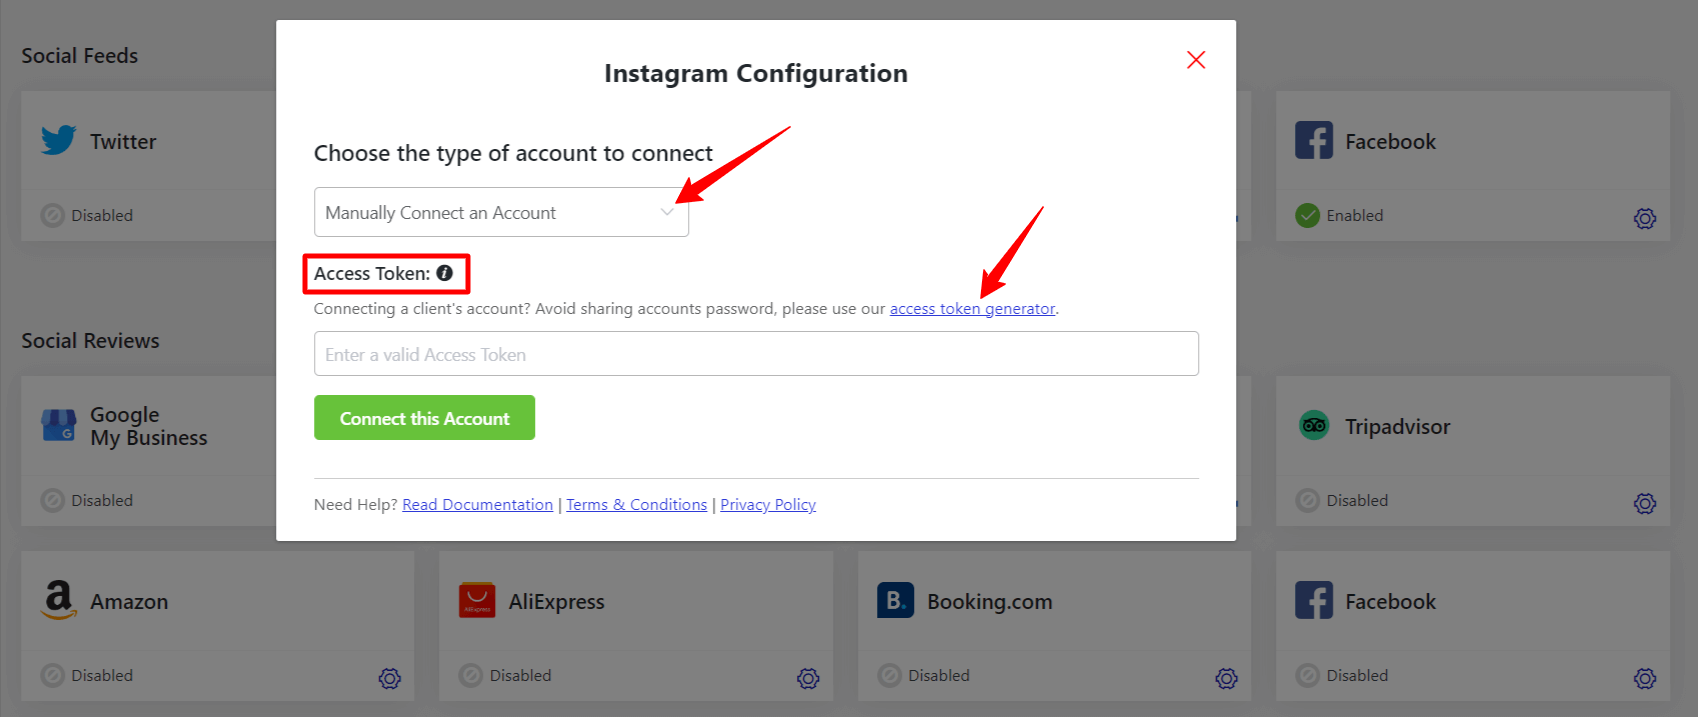 Access Token | Instagram Configuration